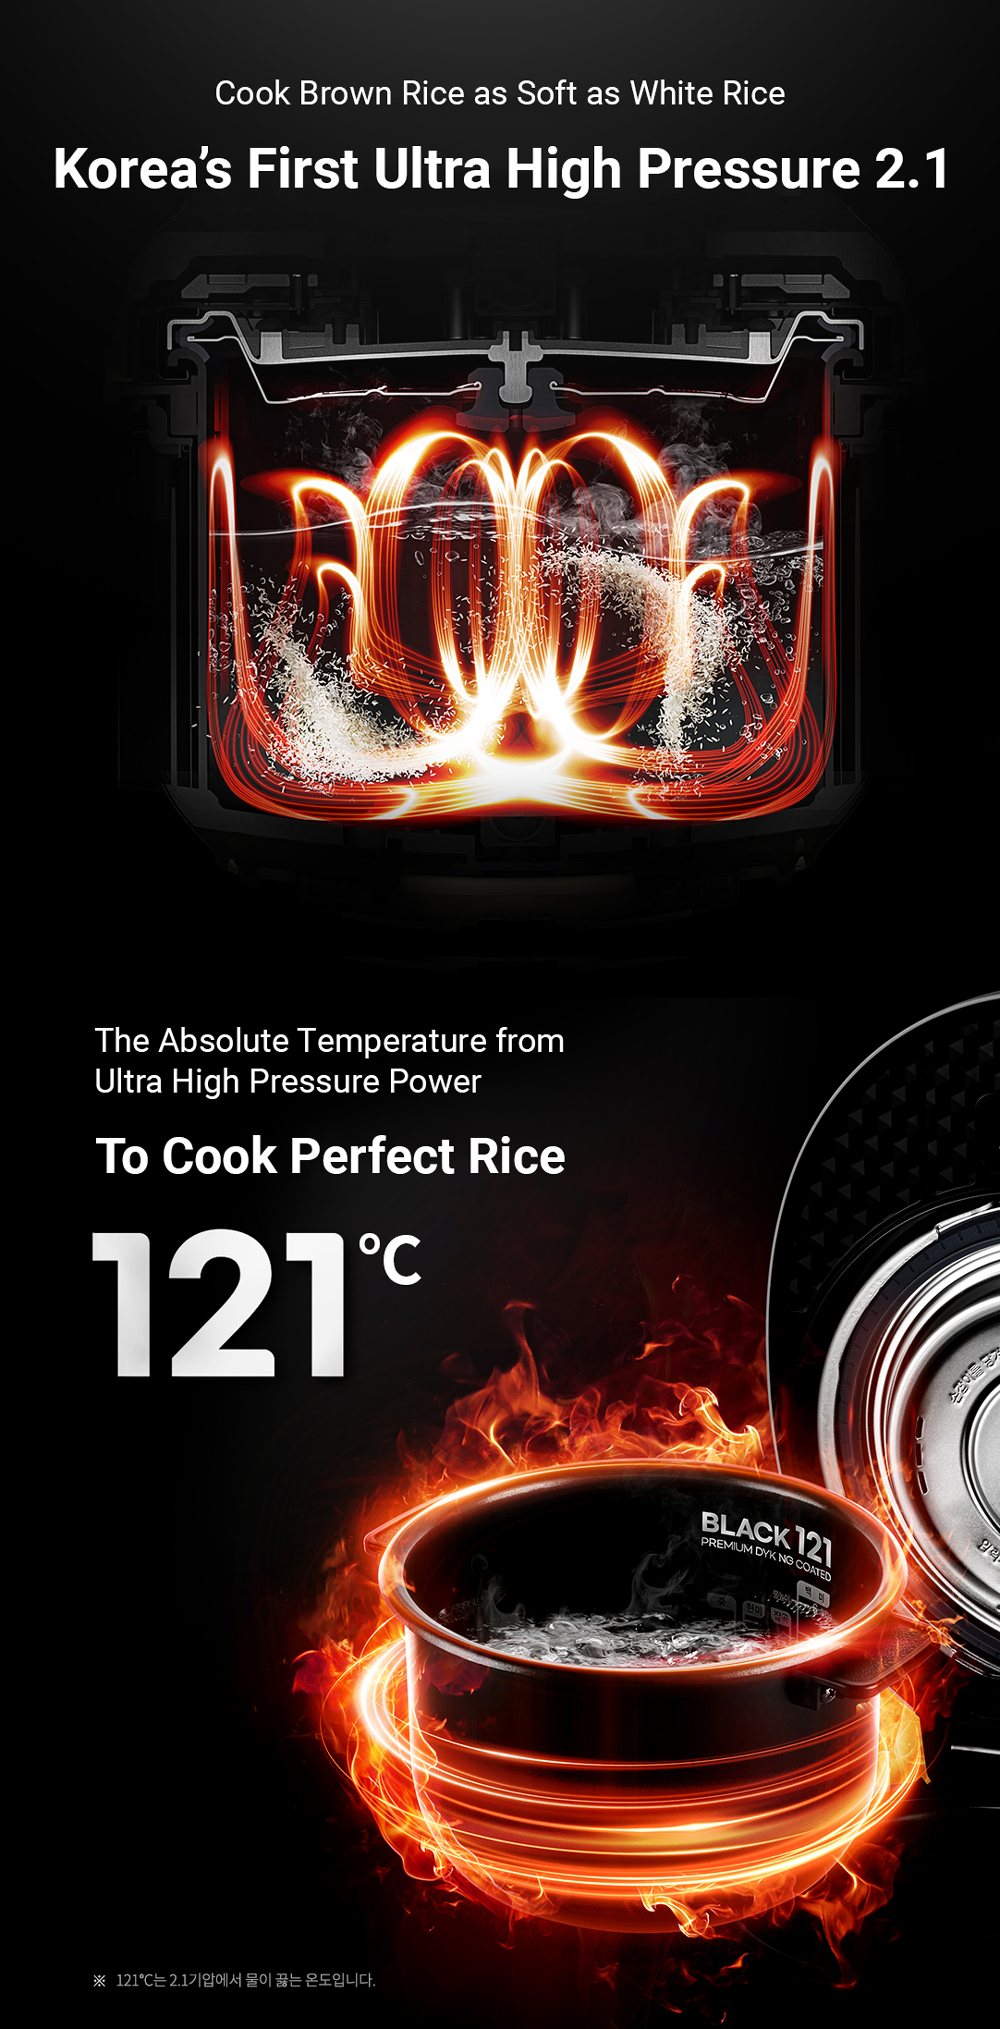 Cuchen 121°C IH Pressure Rice Cooker 6 Cup CRT-RPK0670WUS - Cuchen US